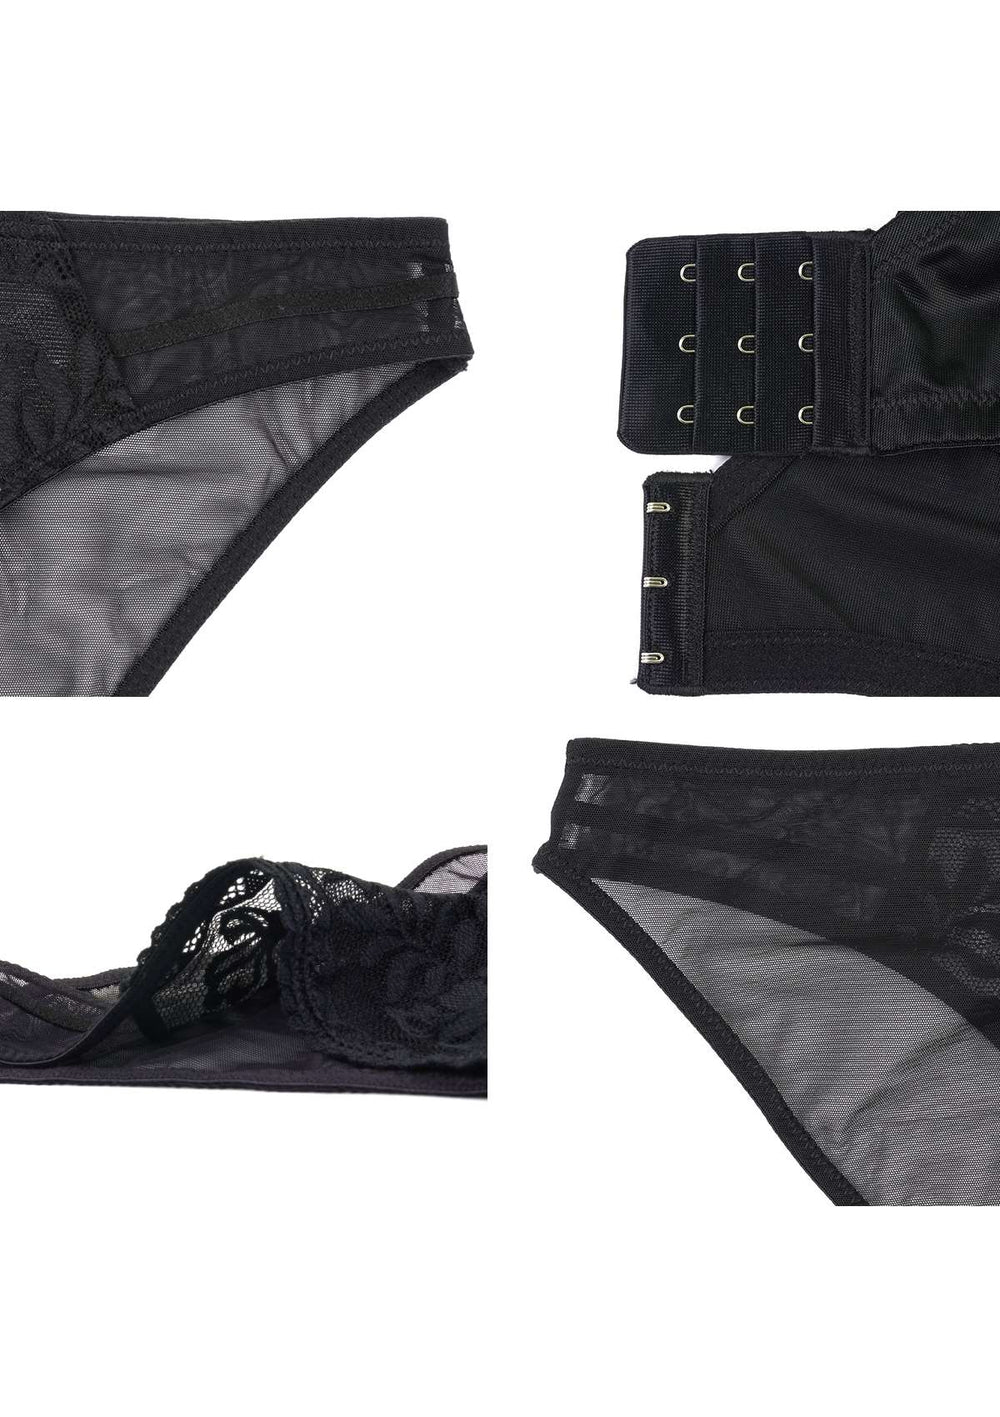 Gladioli Black Floral Lace Bikini Underwear